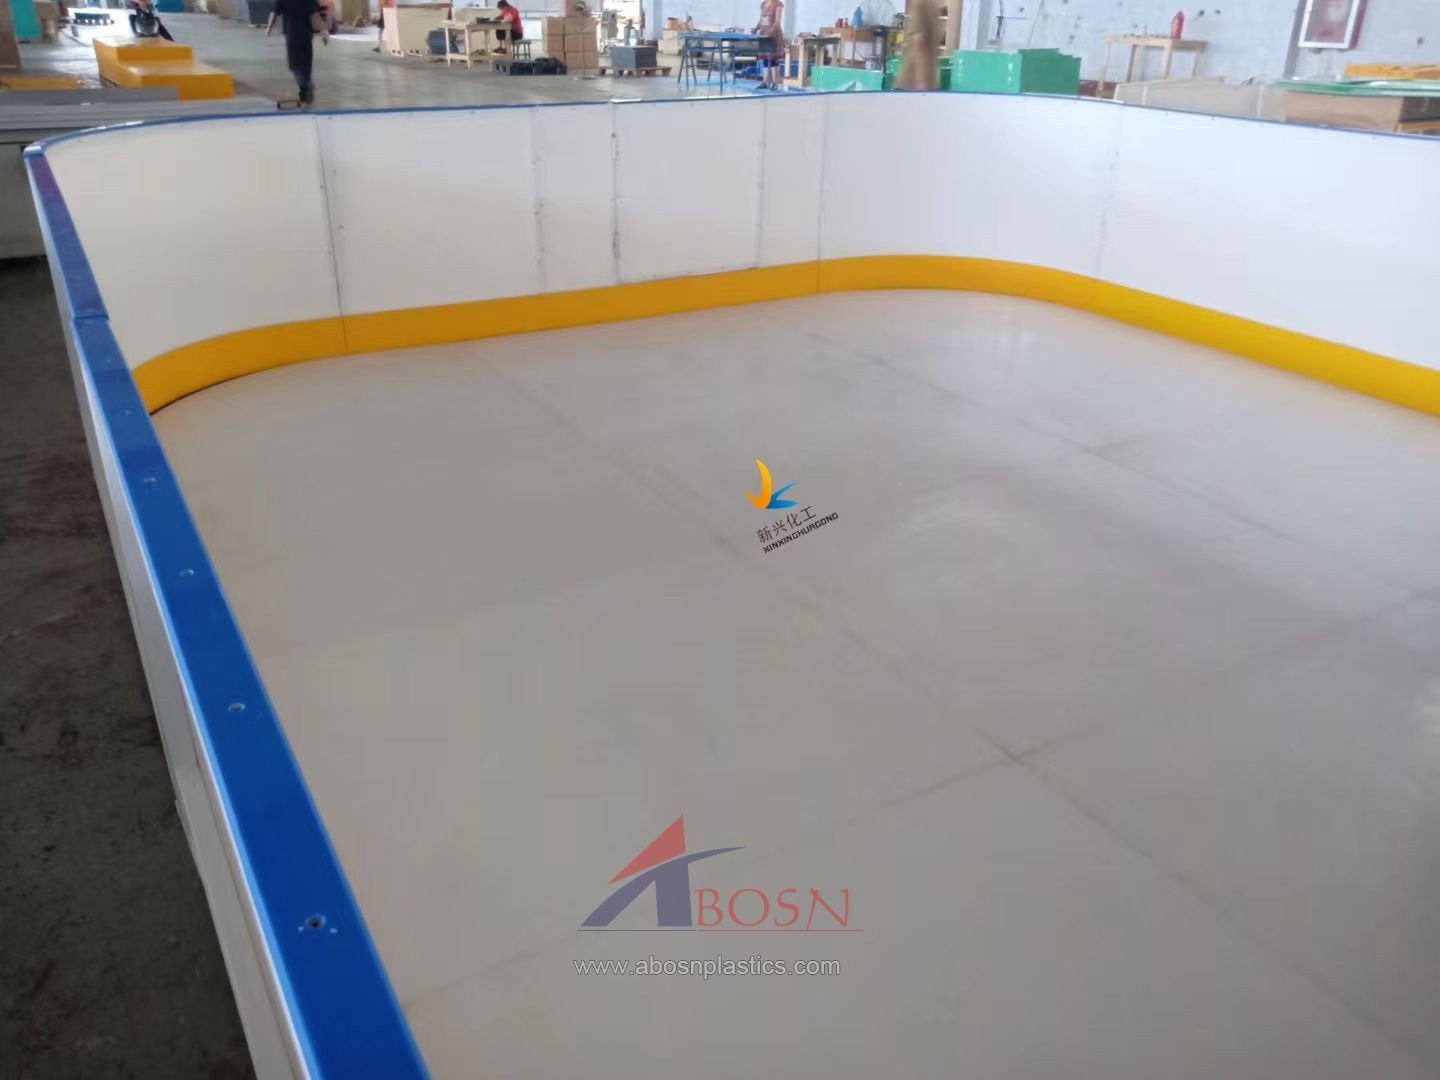 Abosn portable ice hockey dasher board / ice rink fence